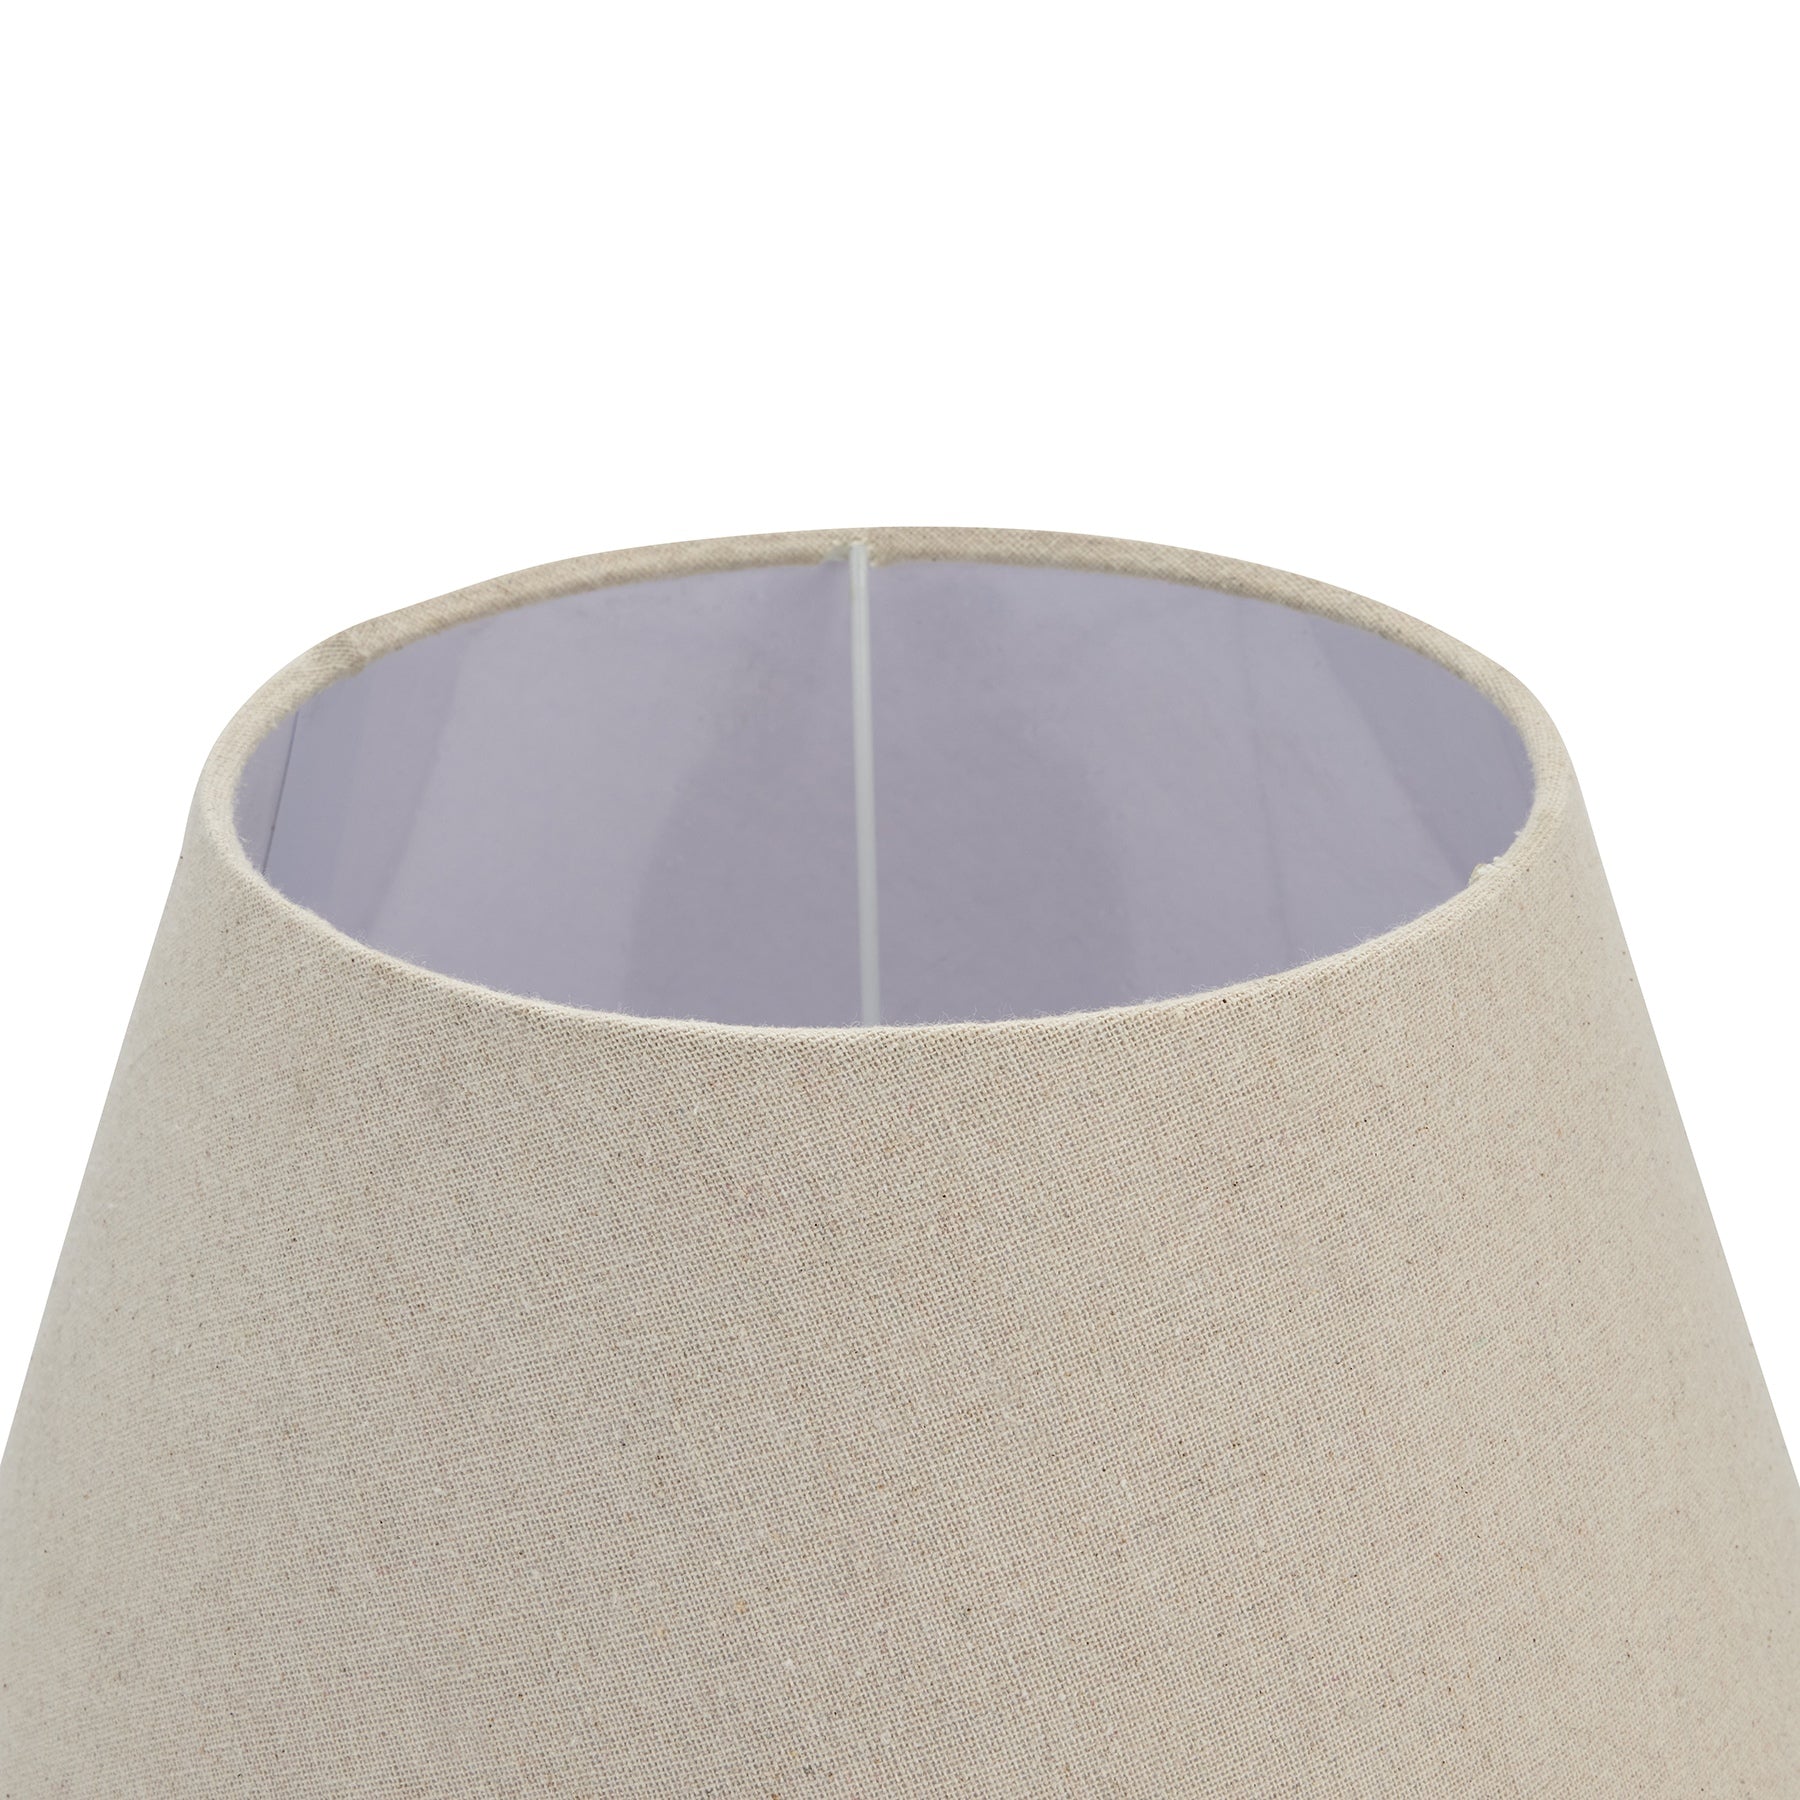 Incia Urn Wooden Table Lamp | 21283 | Fairspot UK